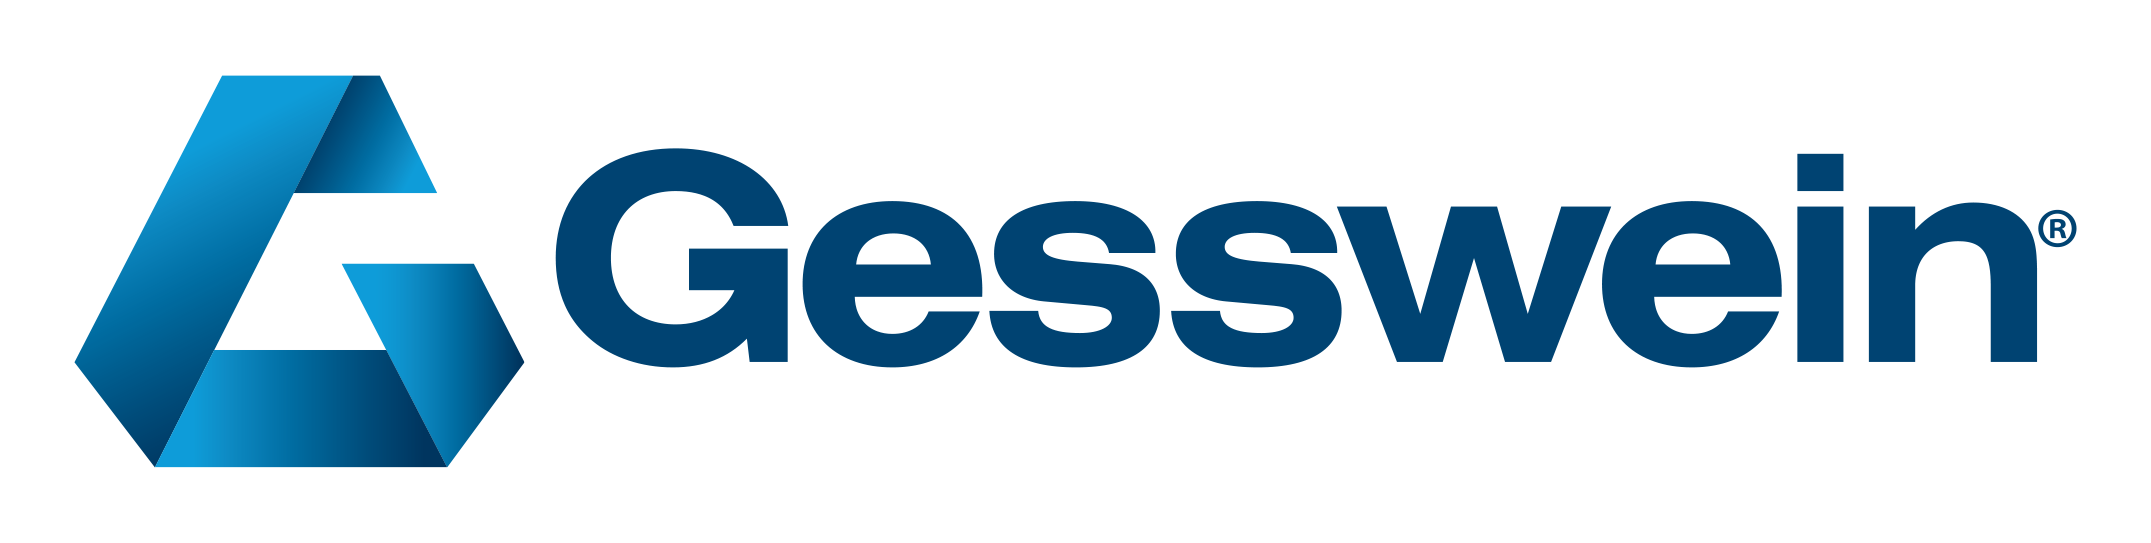 Paul H. Gesswein Co., Inc. Company Logo